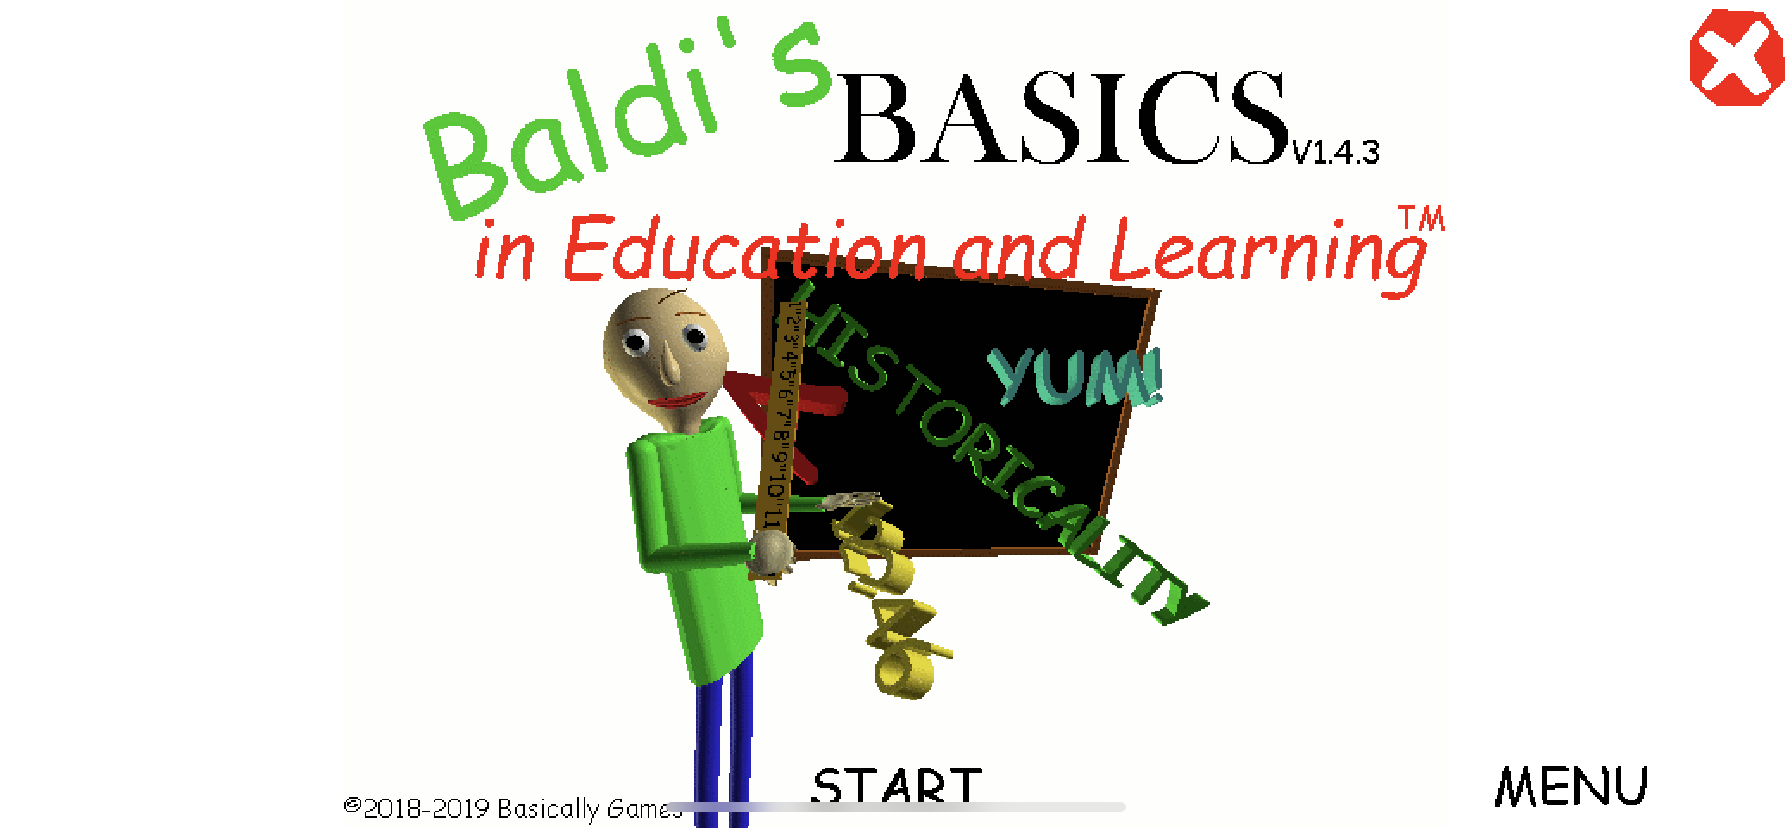 Baldi's Basics Classic on the App Store